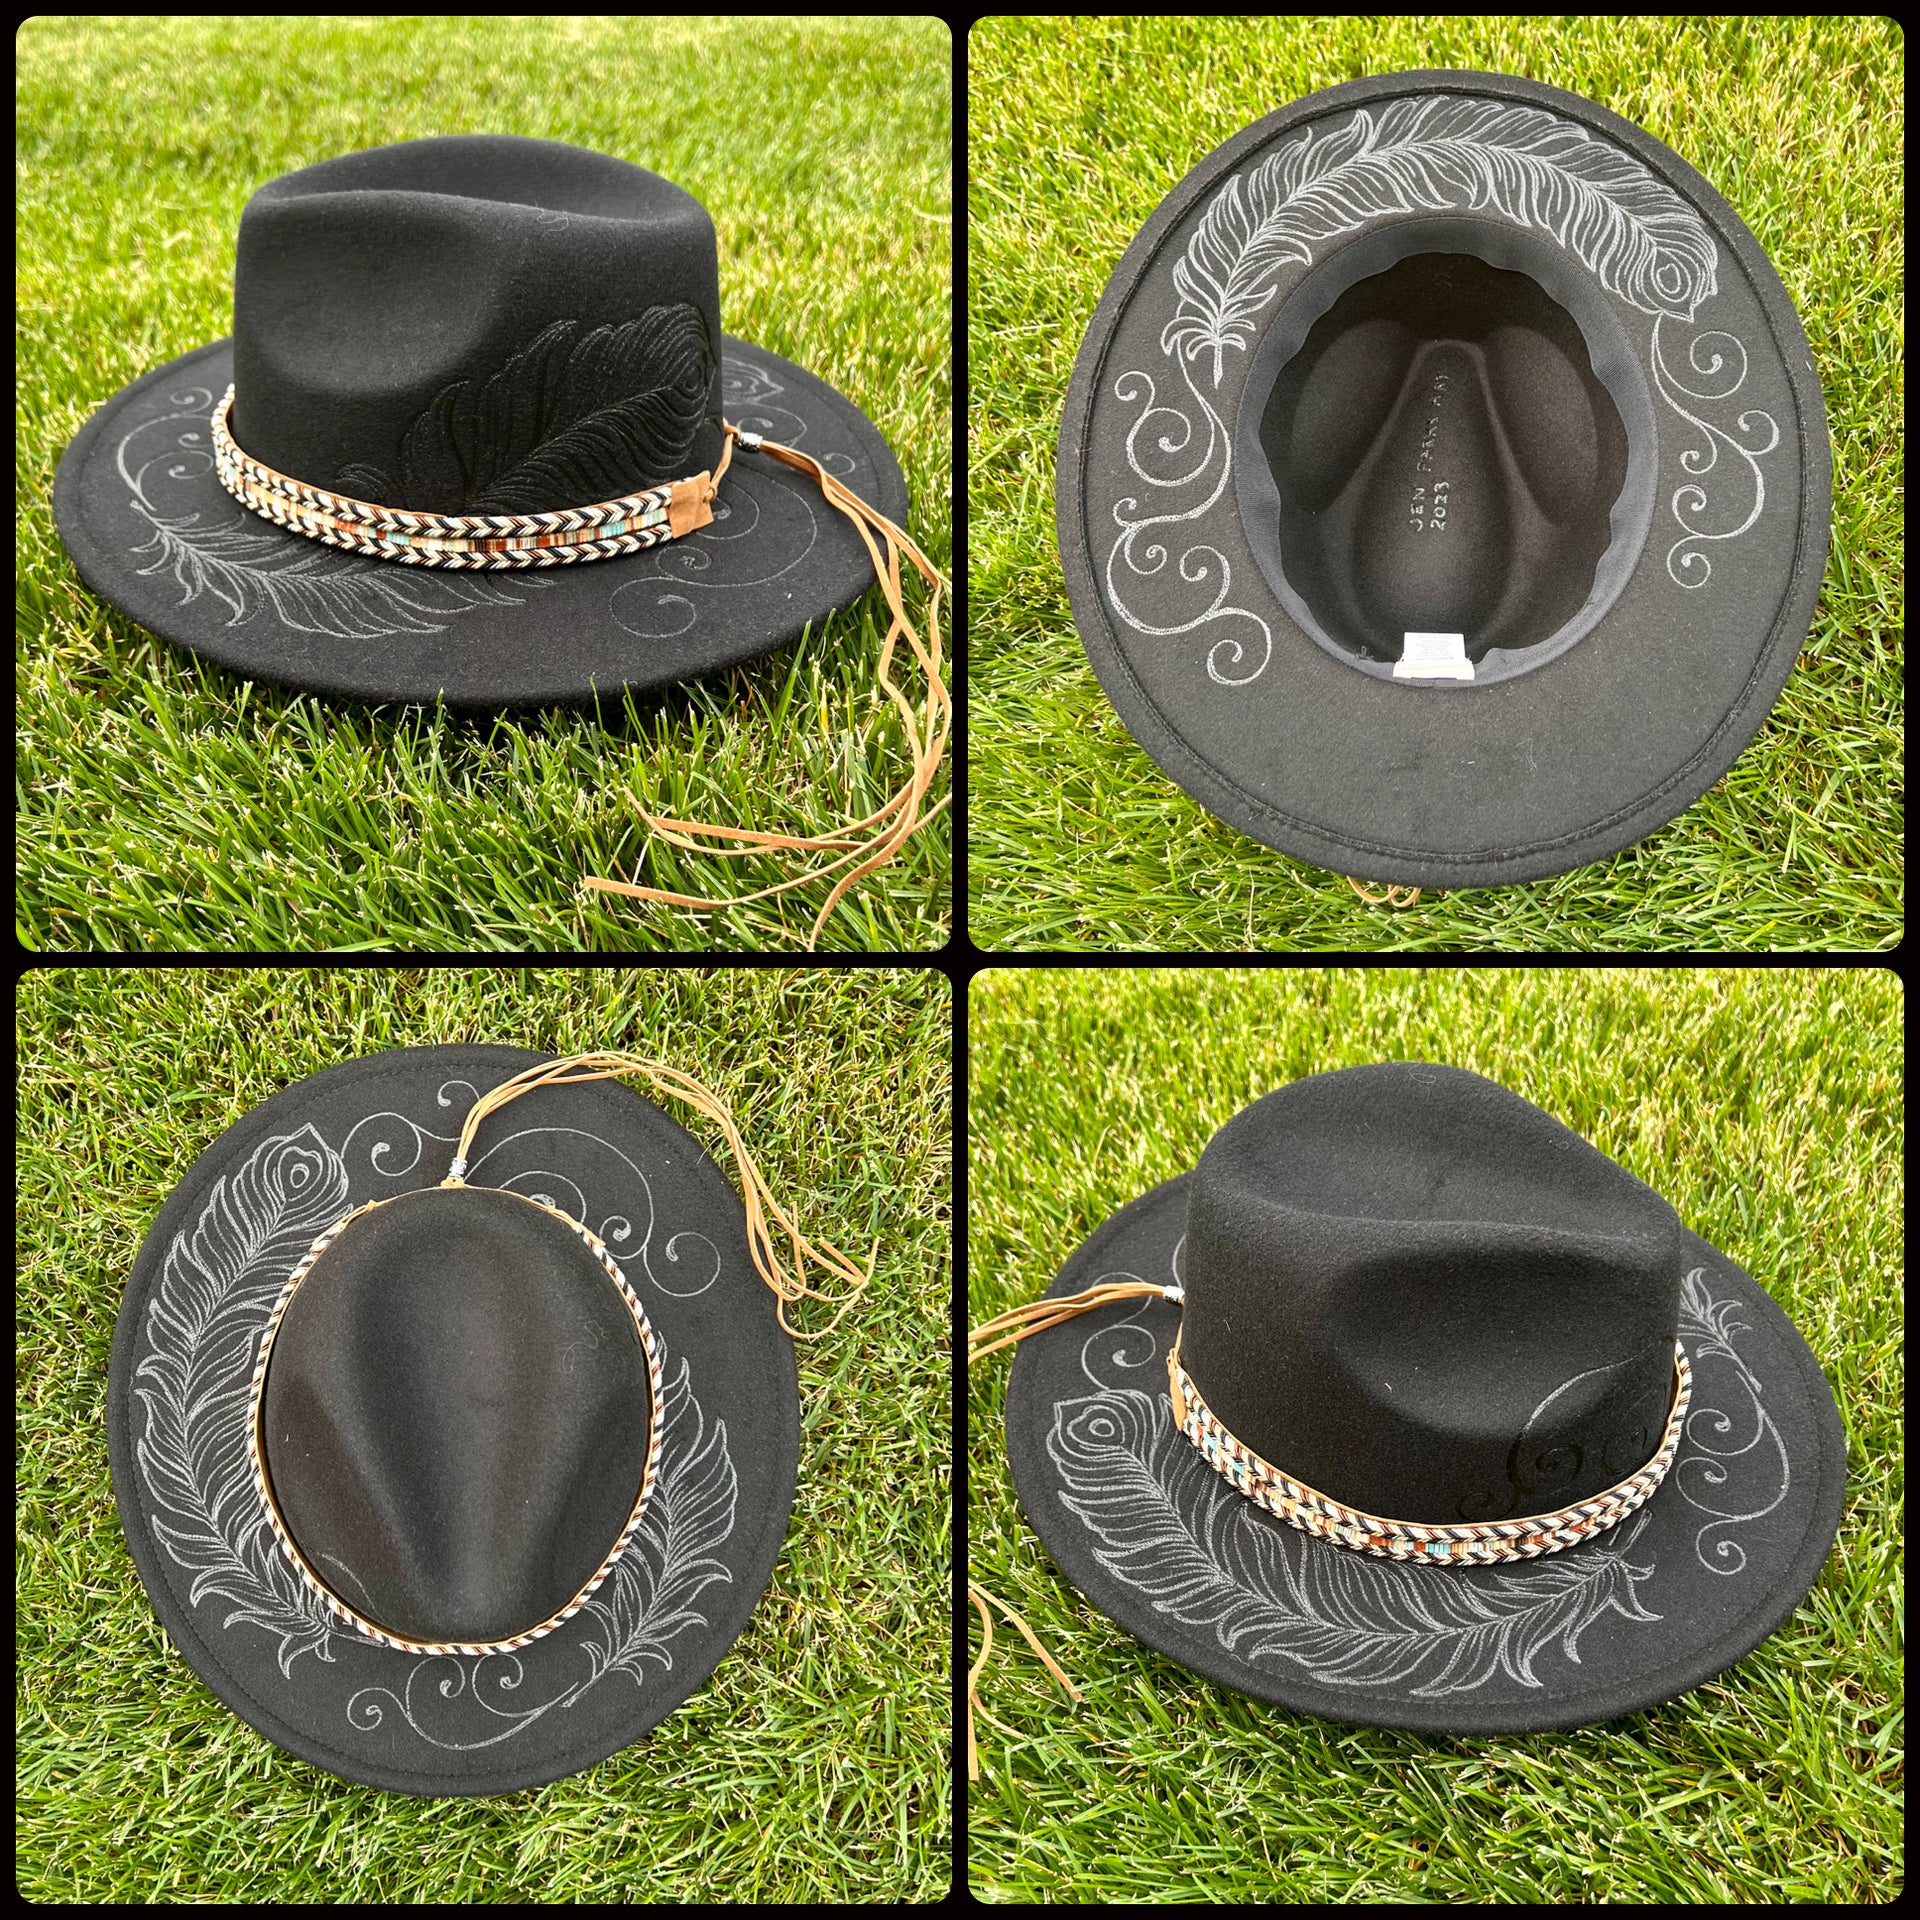 Hats: Peakock's Feathers-Fedora hat